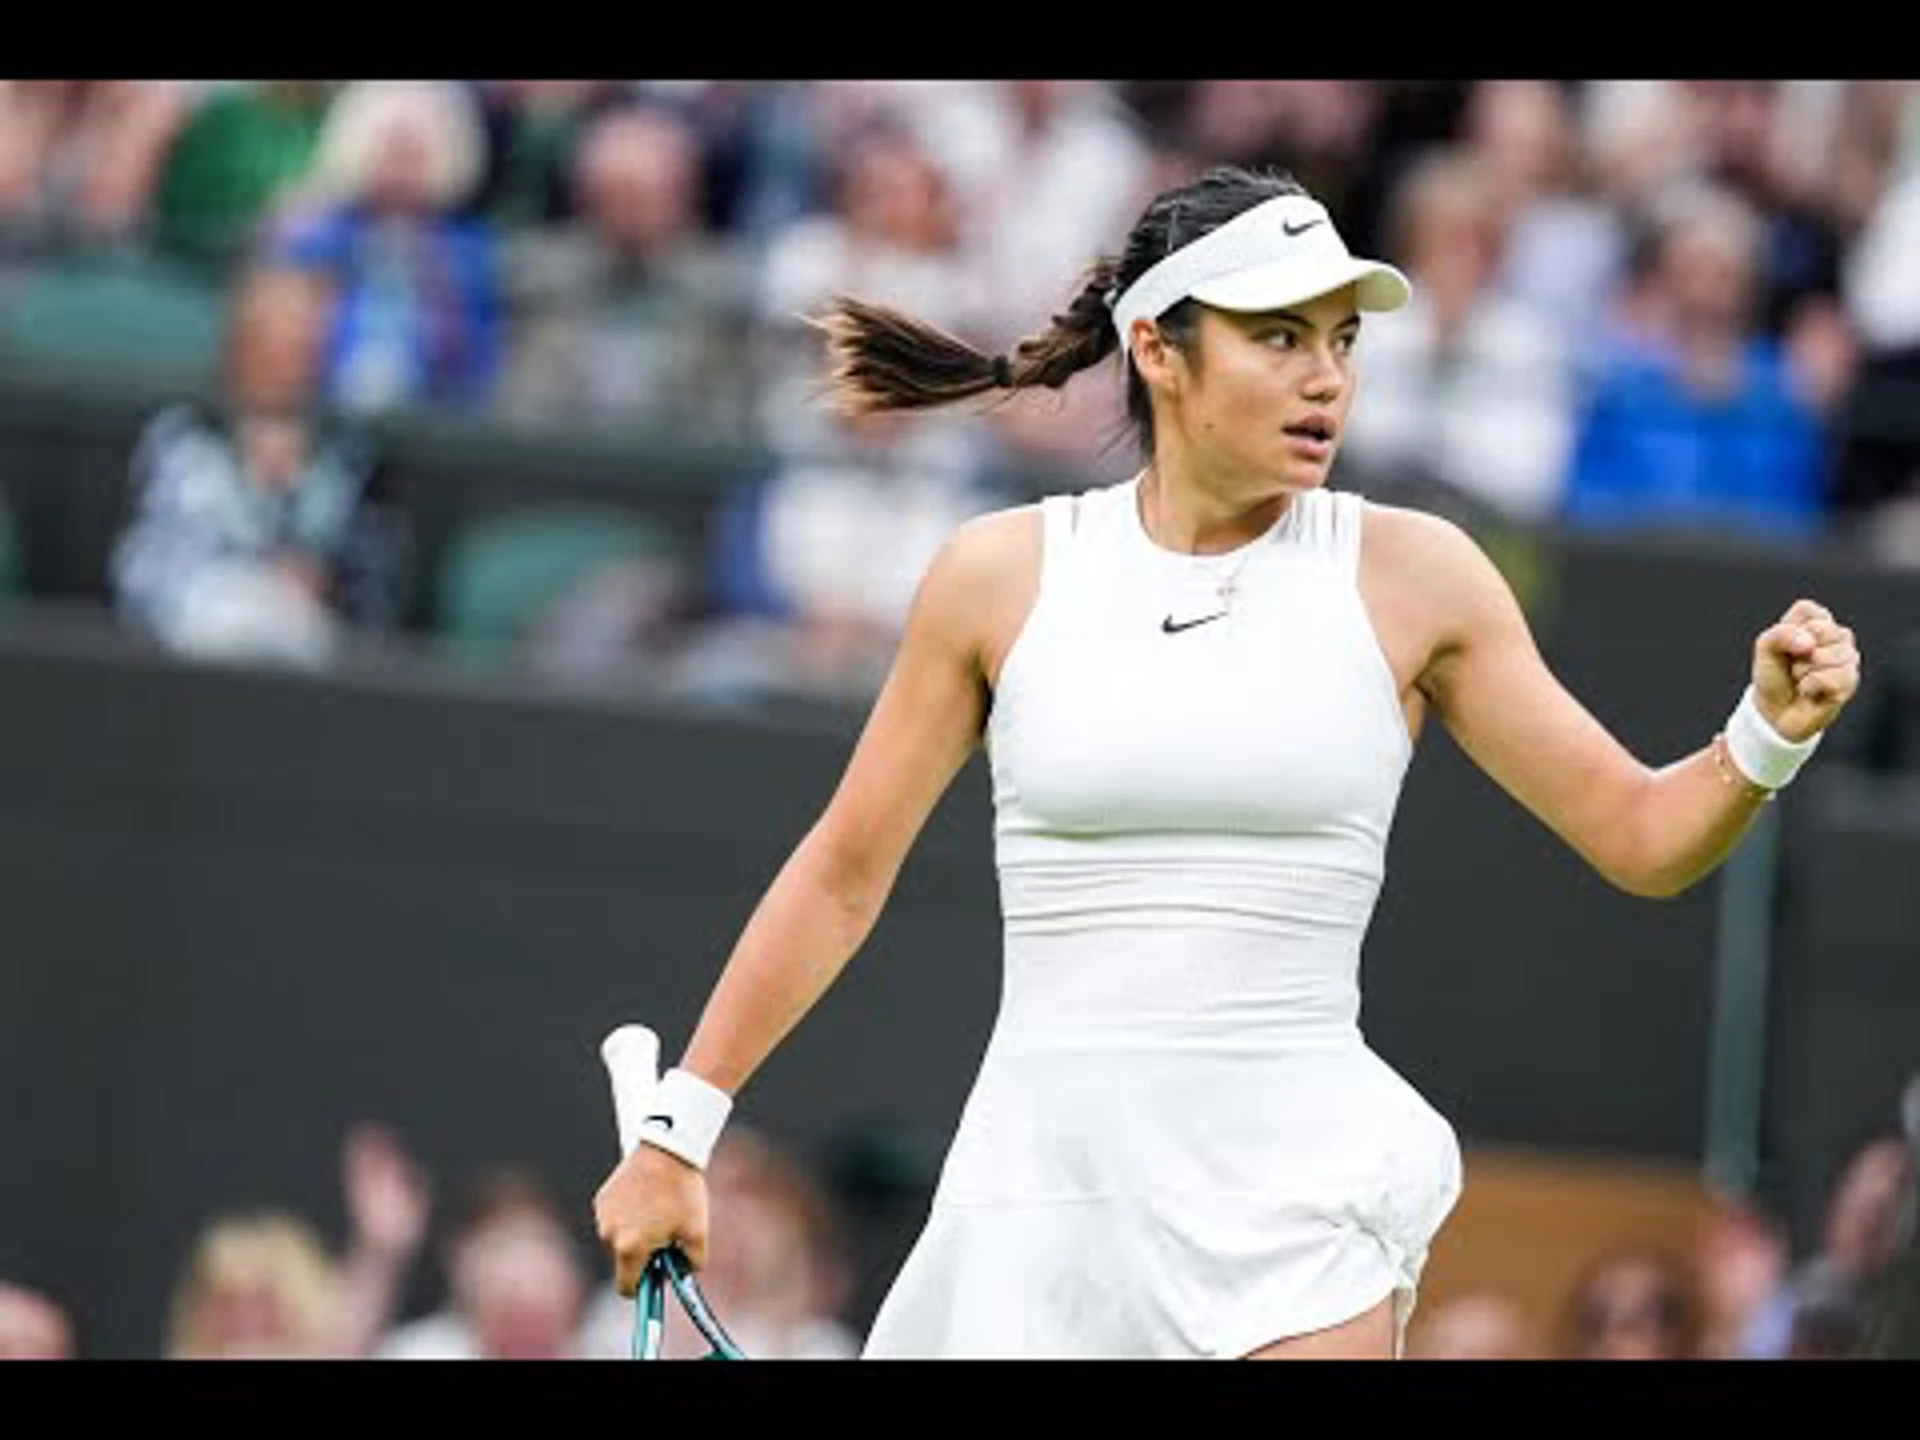 Emma Raducanu v Elise Mertens | Day 3 Highlights | Wimbledon